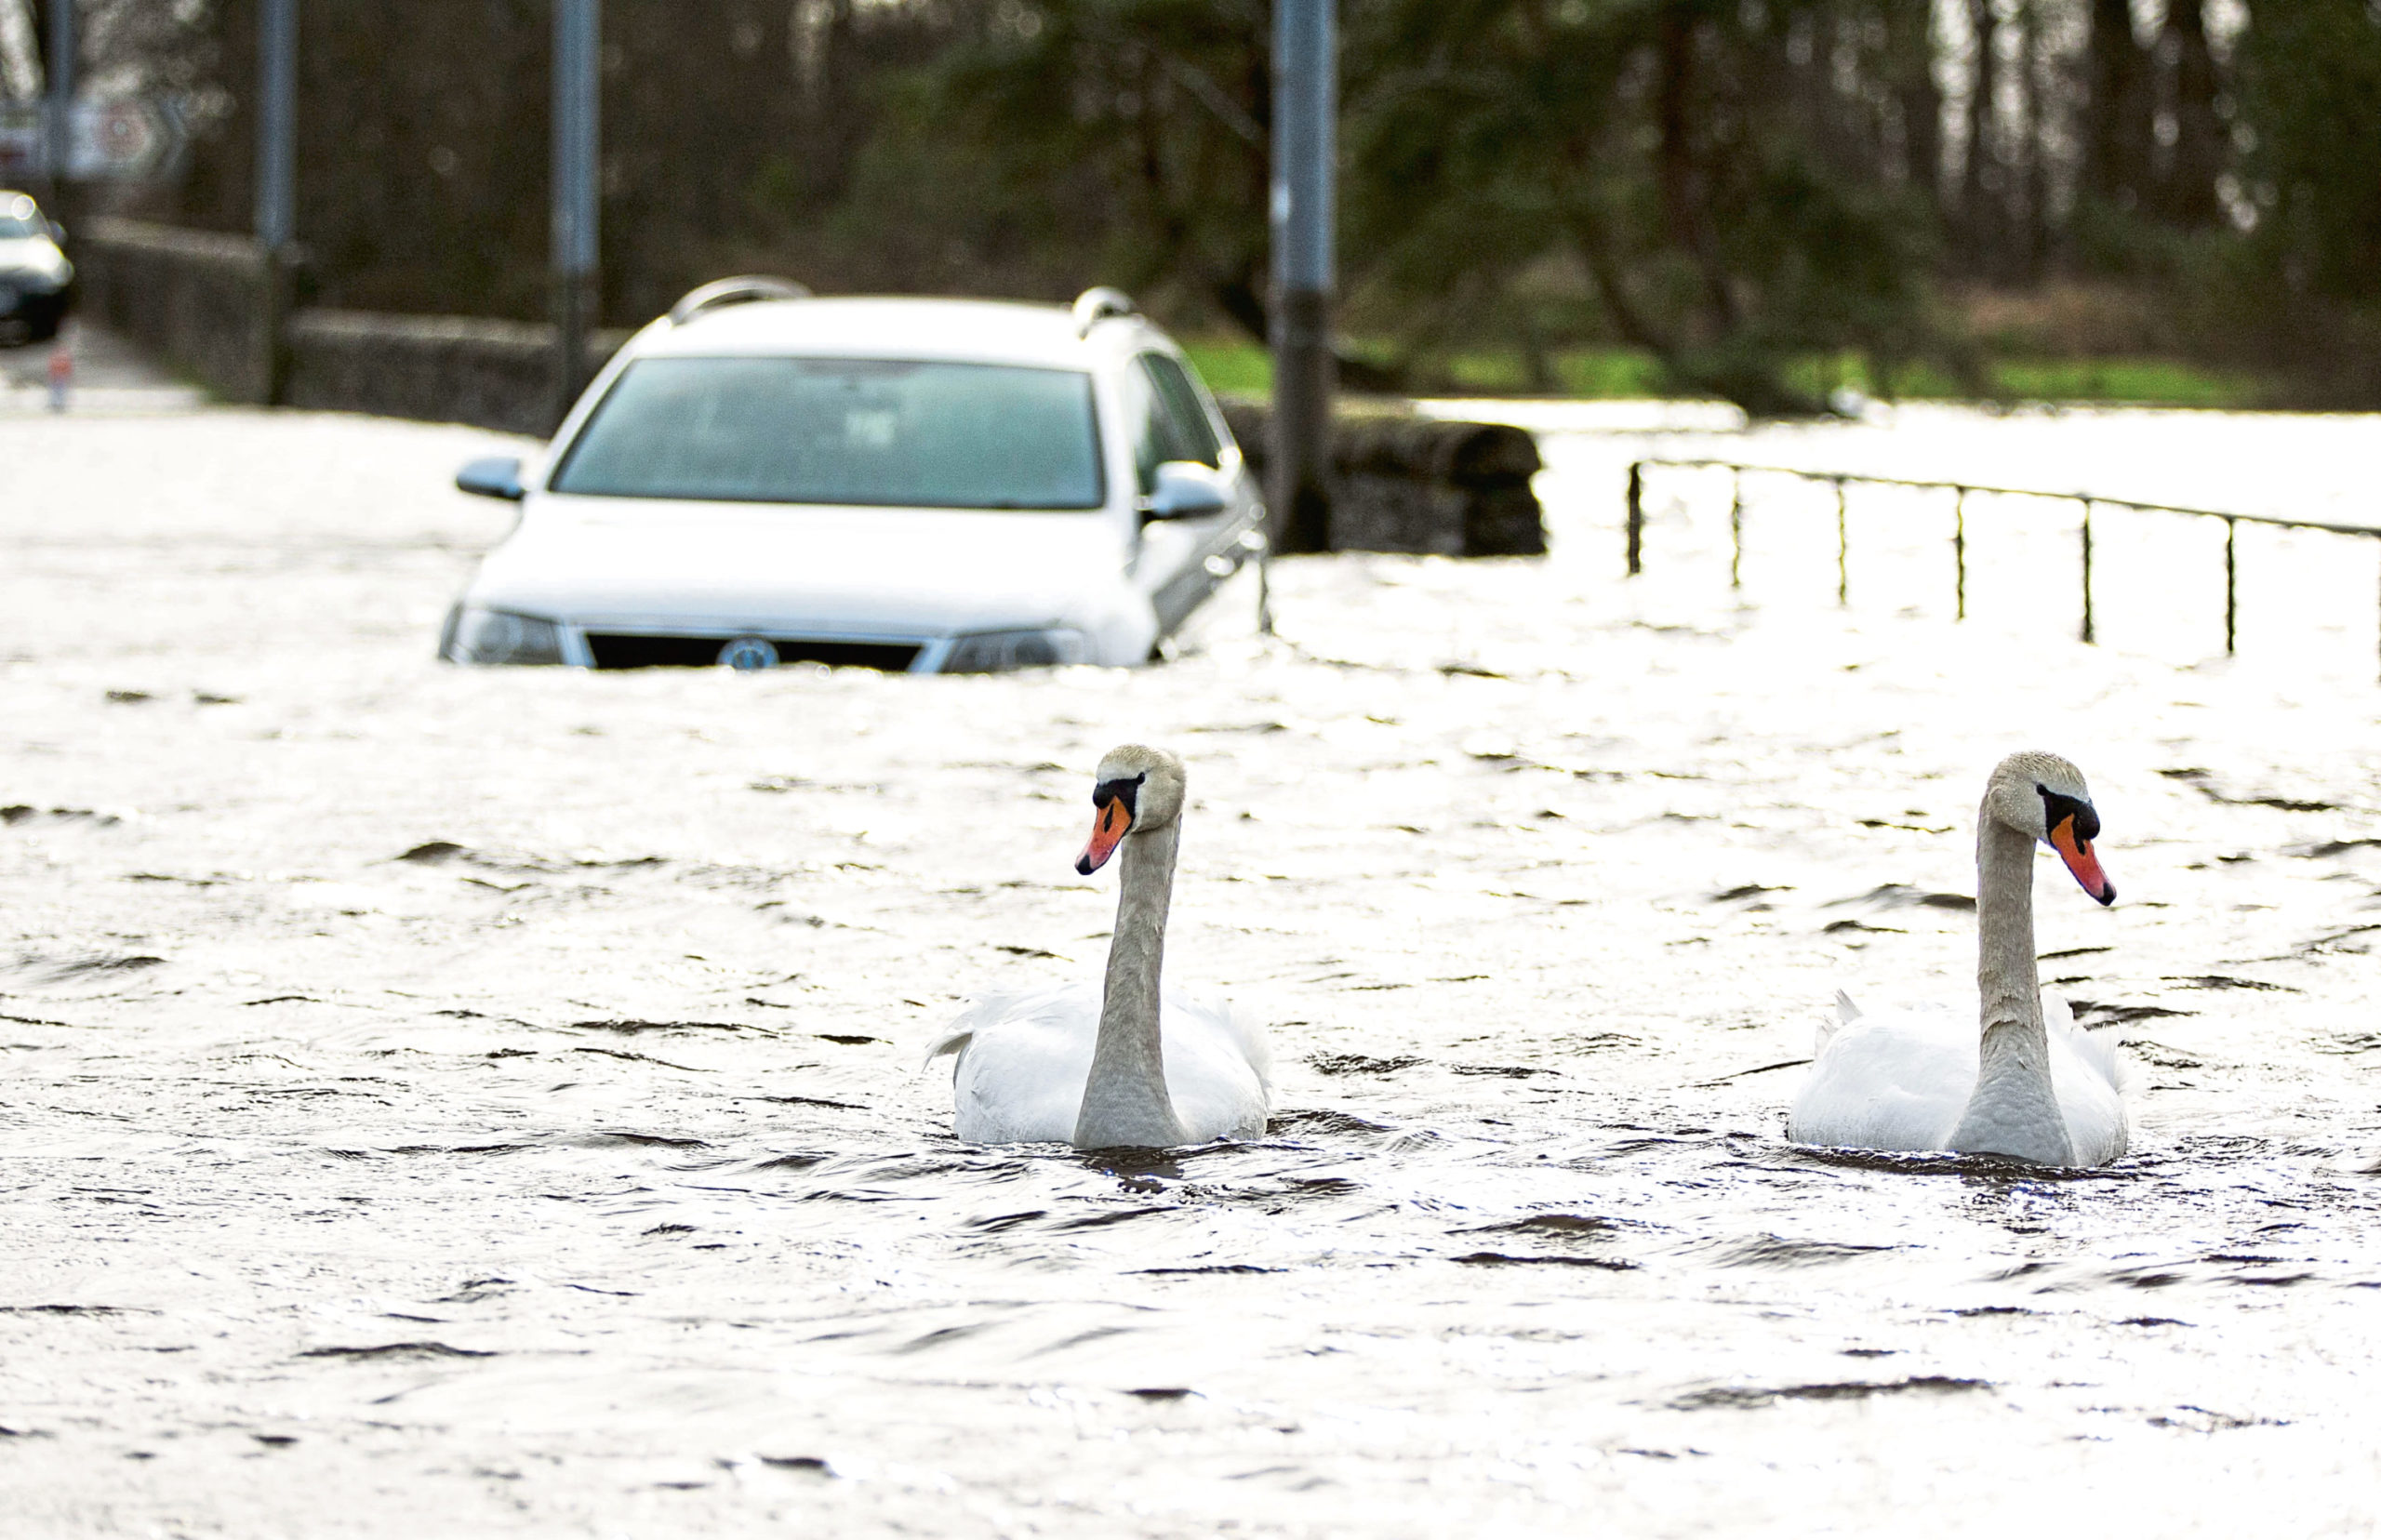 Swans swim past a car stuck in floods in Lochwinnoch, Renfrewshire